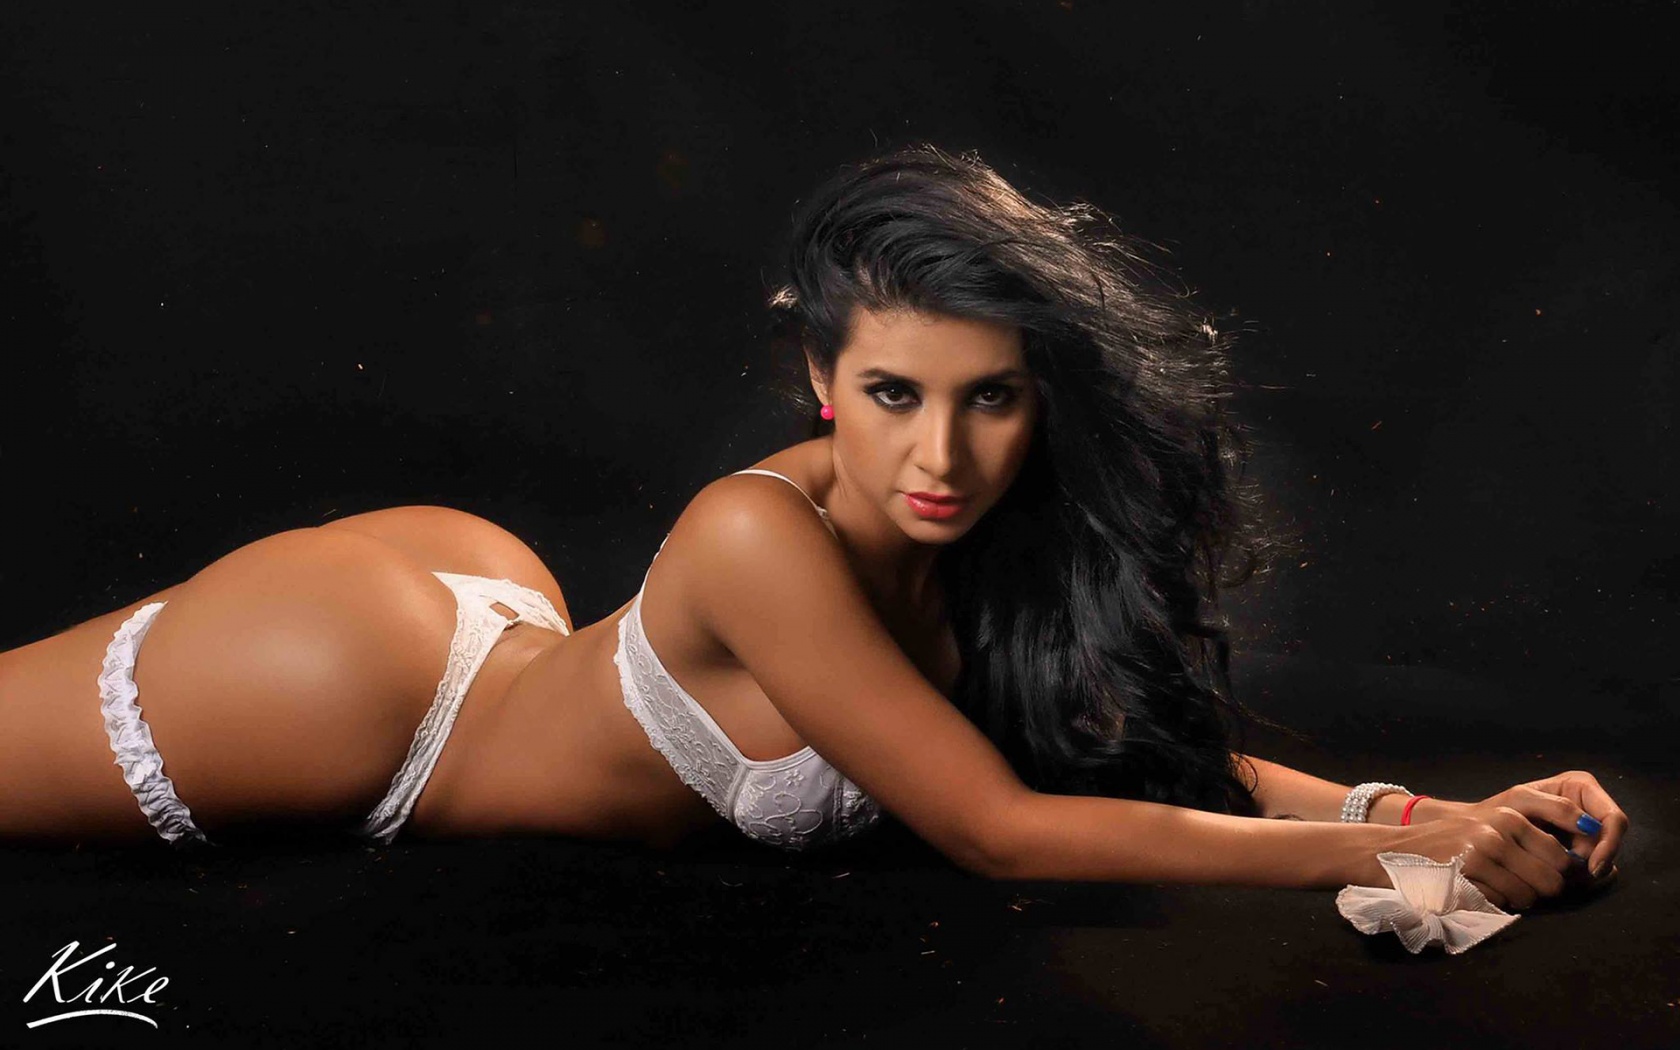 1680px x 1050px - Alejandra Isaza hot ass latina babe in lingerie sweet round ...